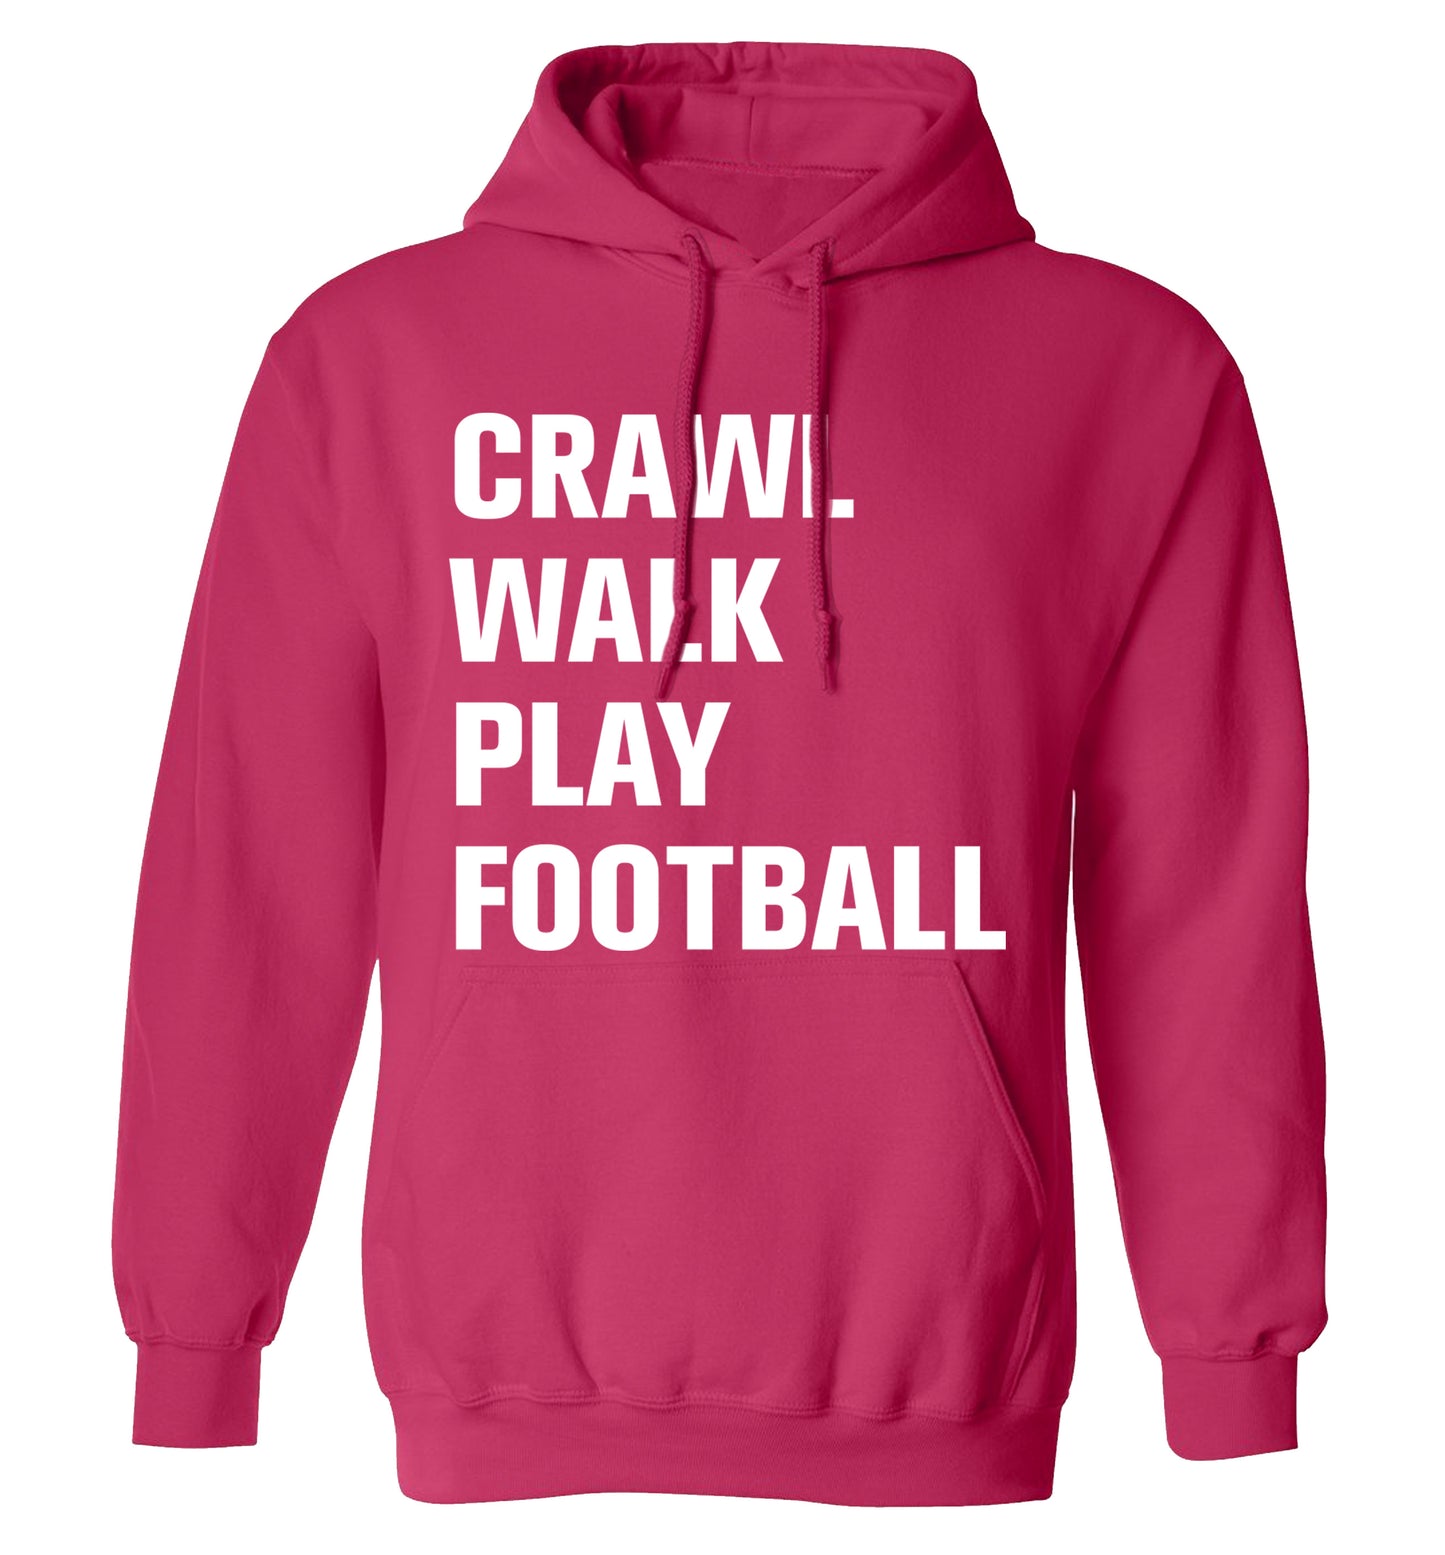 Crawl, walk, play football adults unisex pink hoodie 2XL